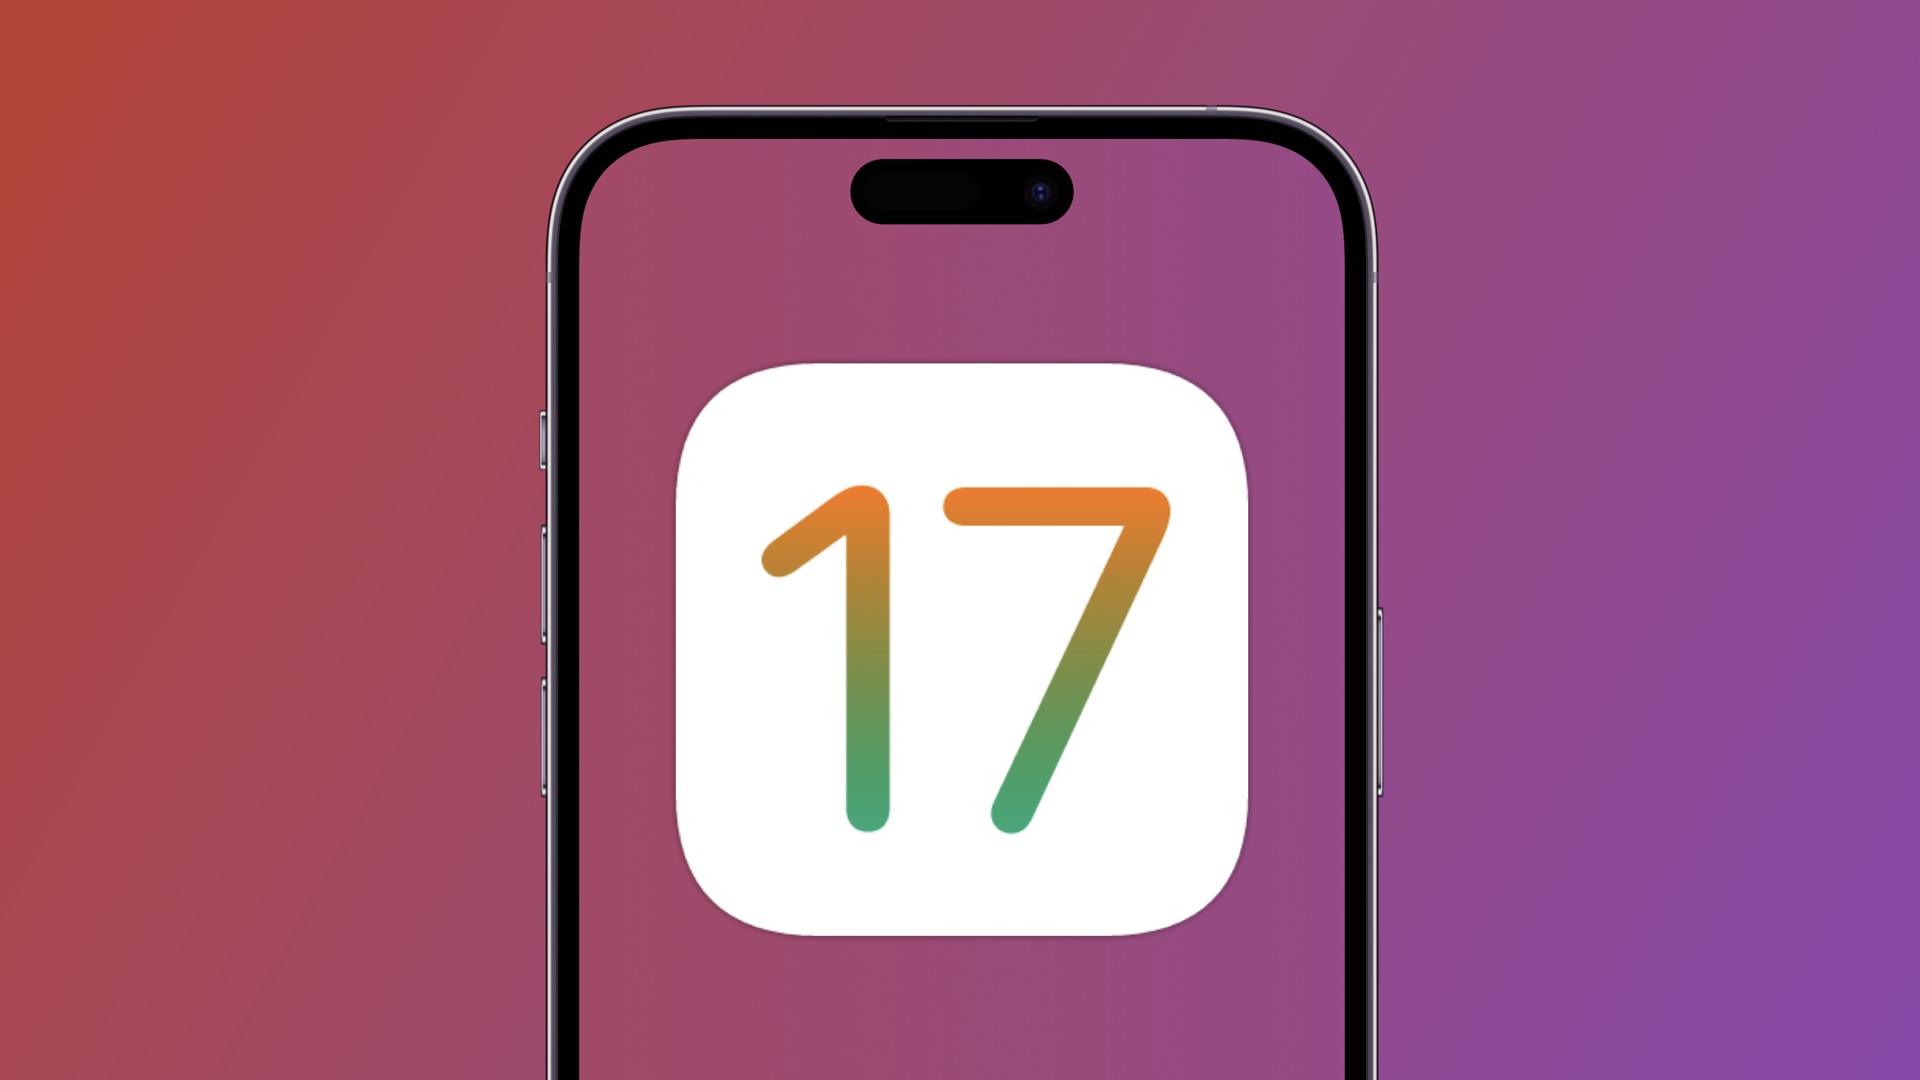 iOS 17 logo